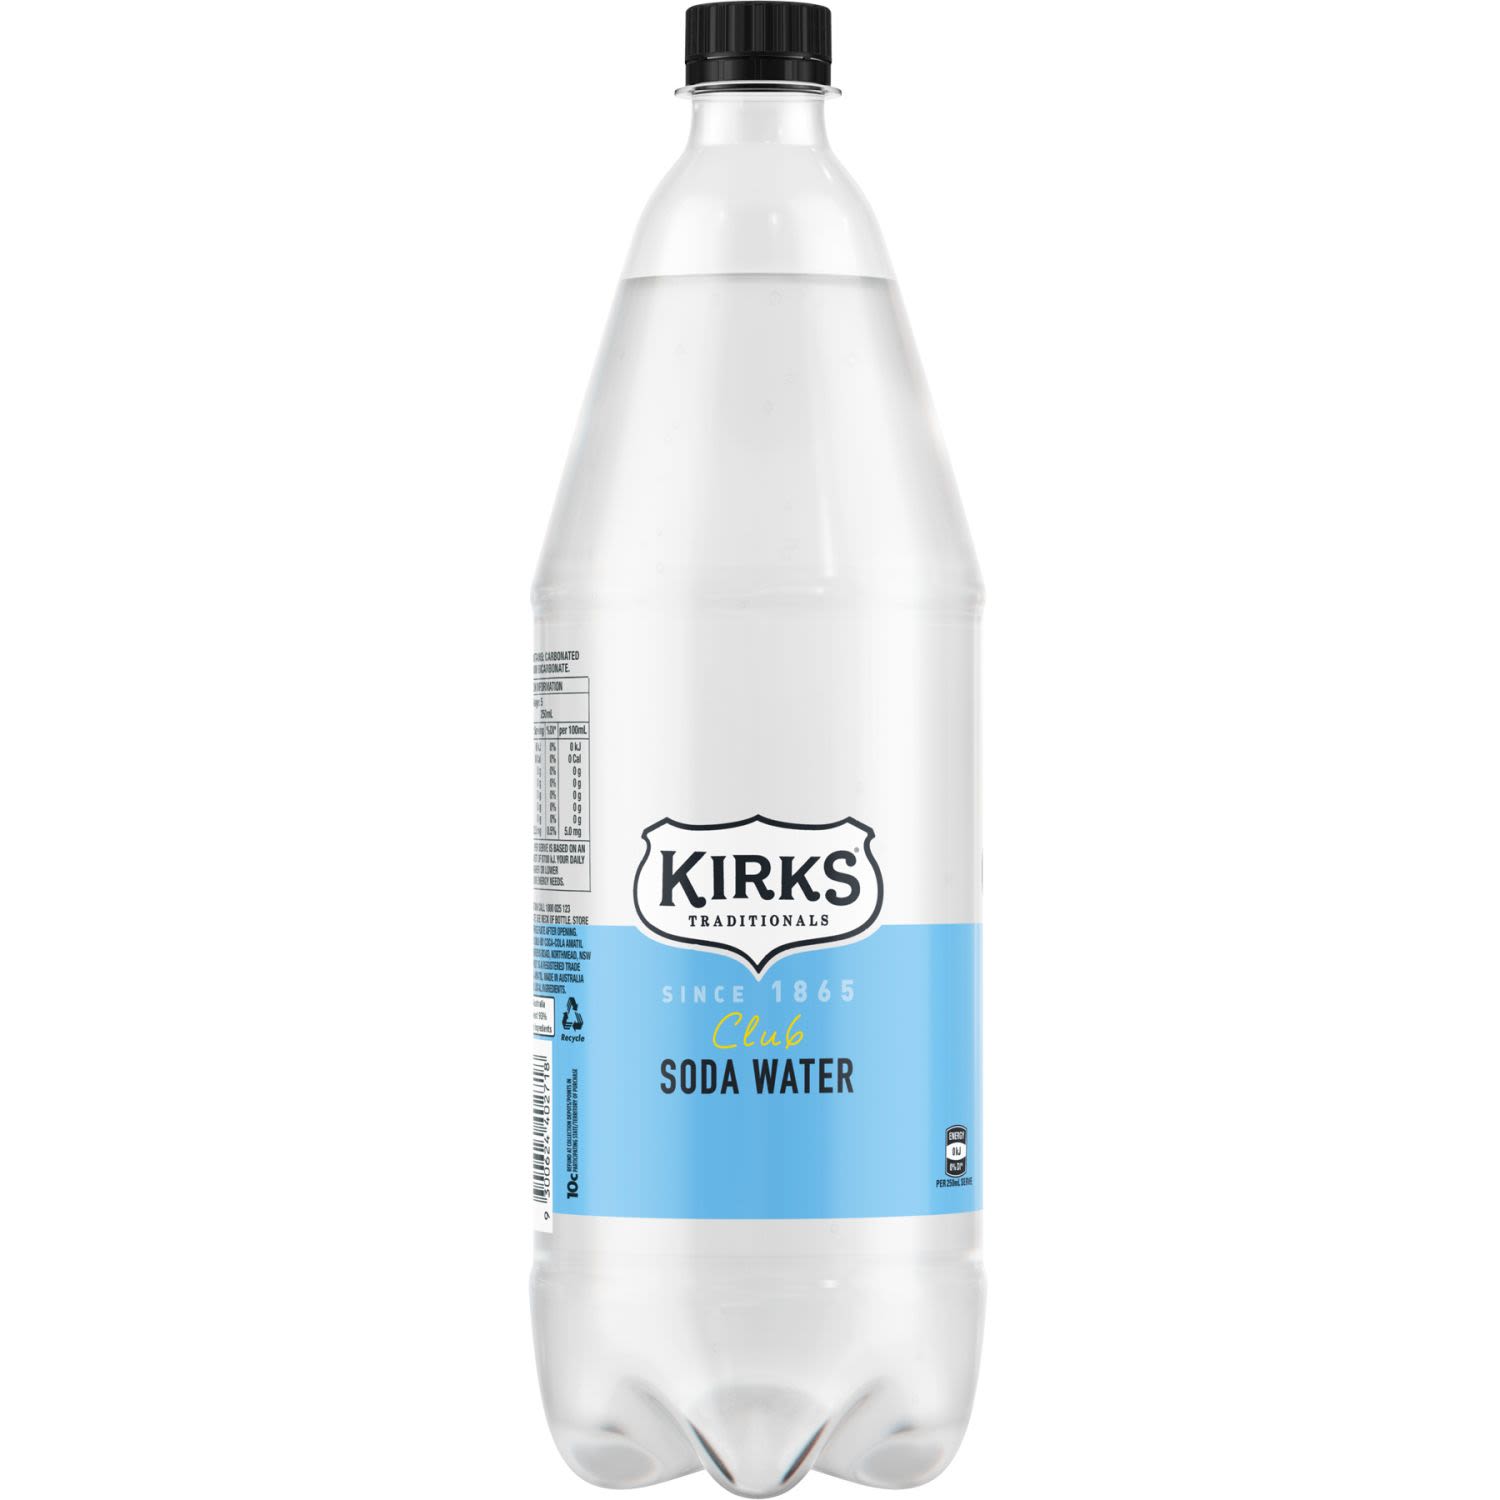 Kirks Club Soda Water Bottle | IGA Shop Online